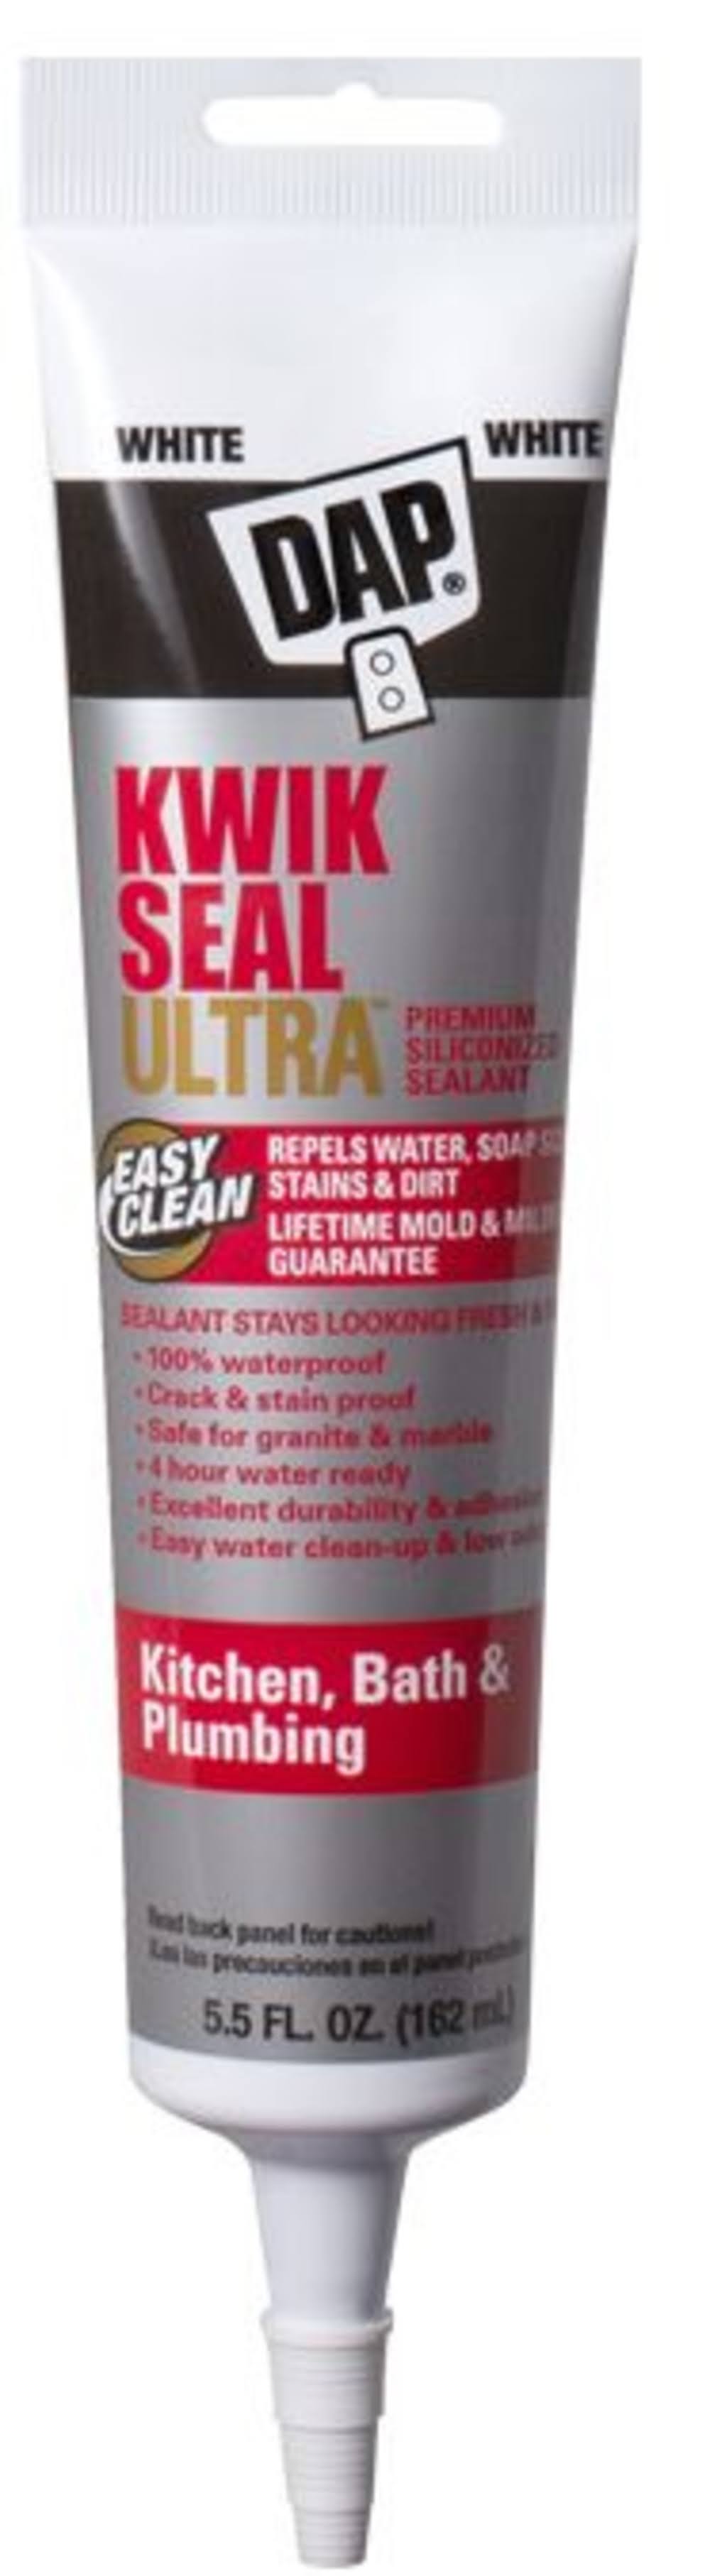 DAP Kwik Seal Ultra Premium Kitchen & Bath Sealant - Clear, 5.5oz